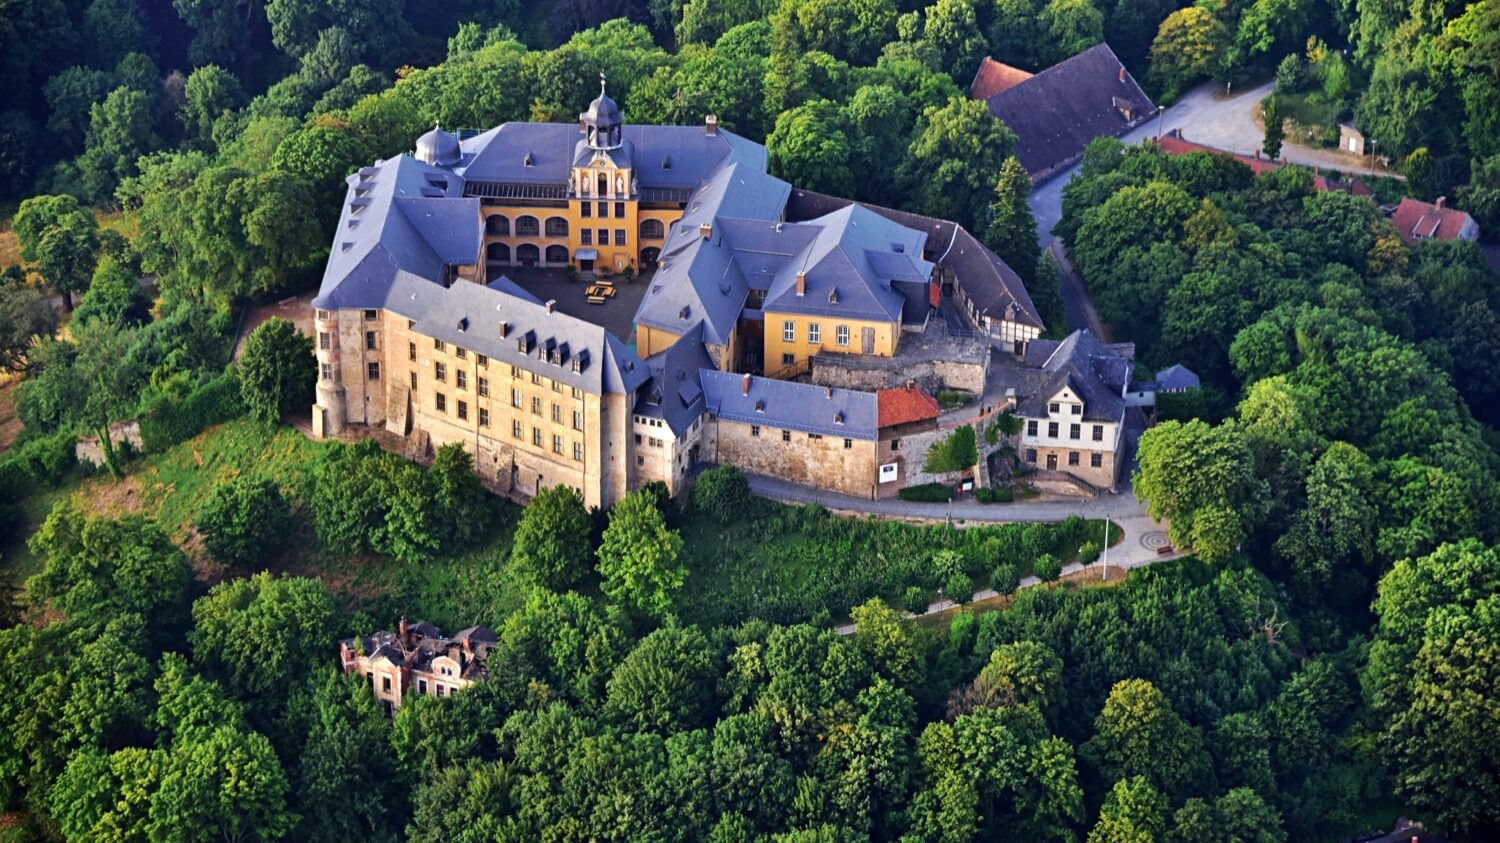 Blankenburg Castle (Harz)